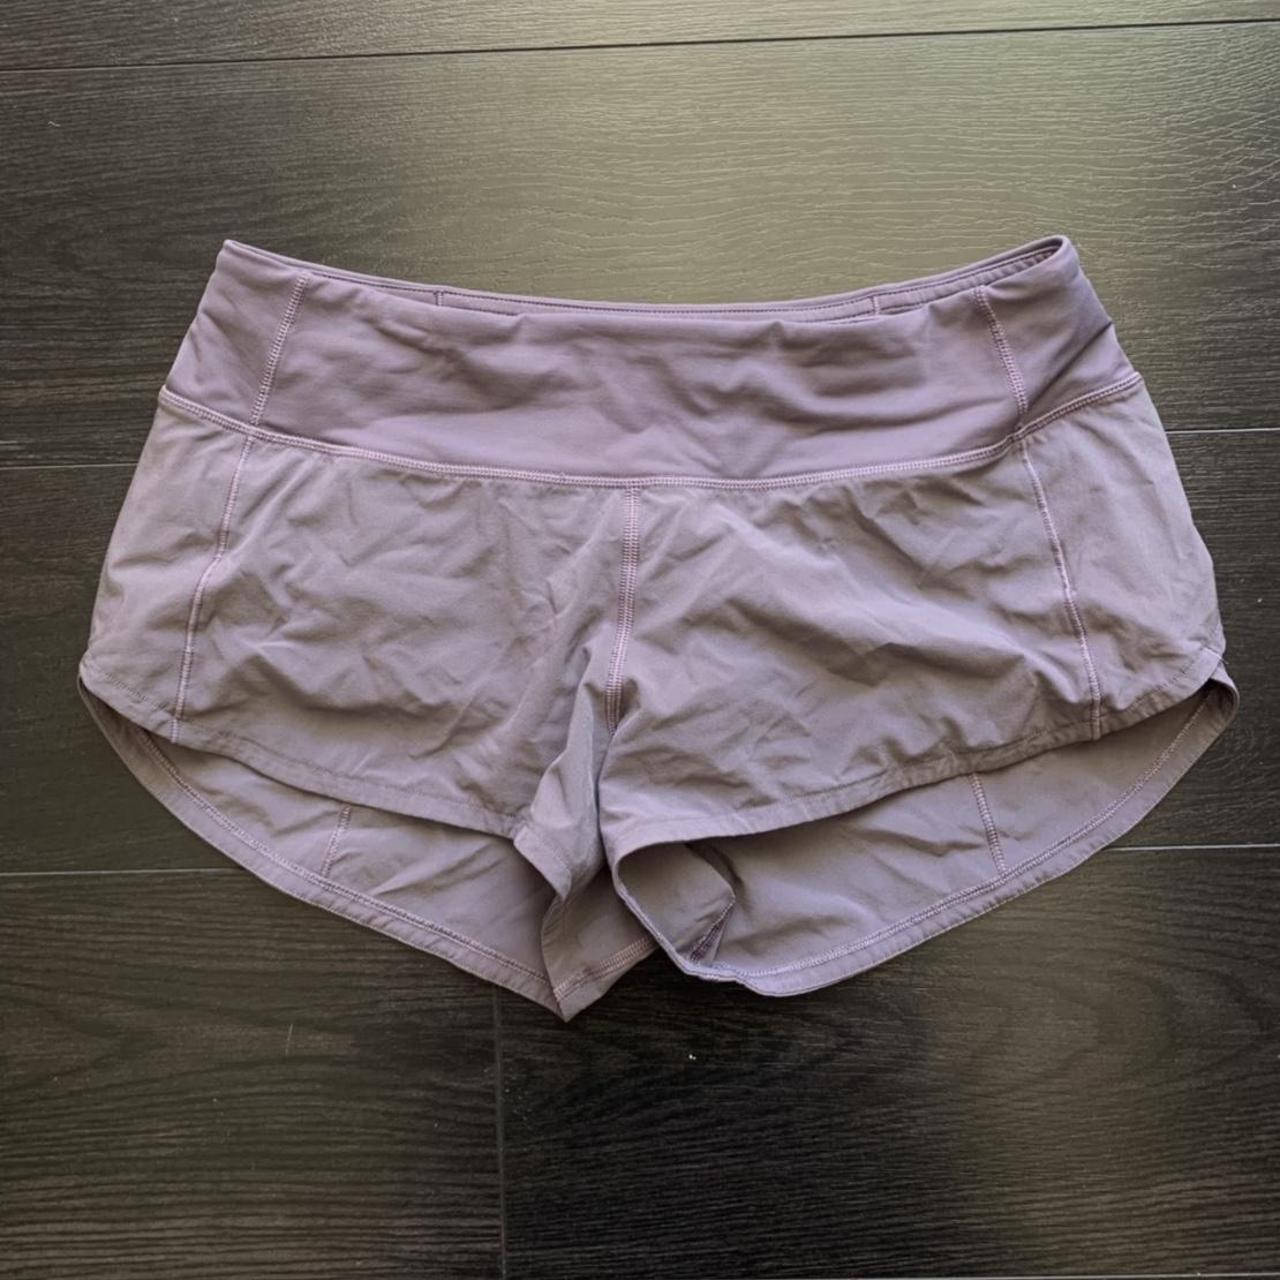 Purple Lululemon speed up shorts 4” inseam great - Depop